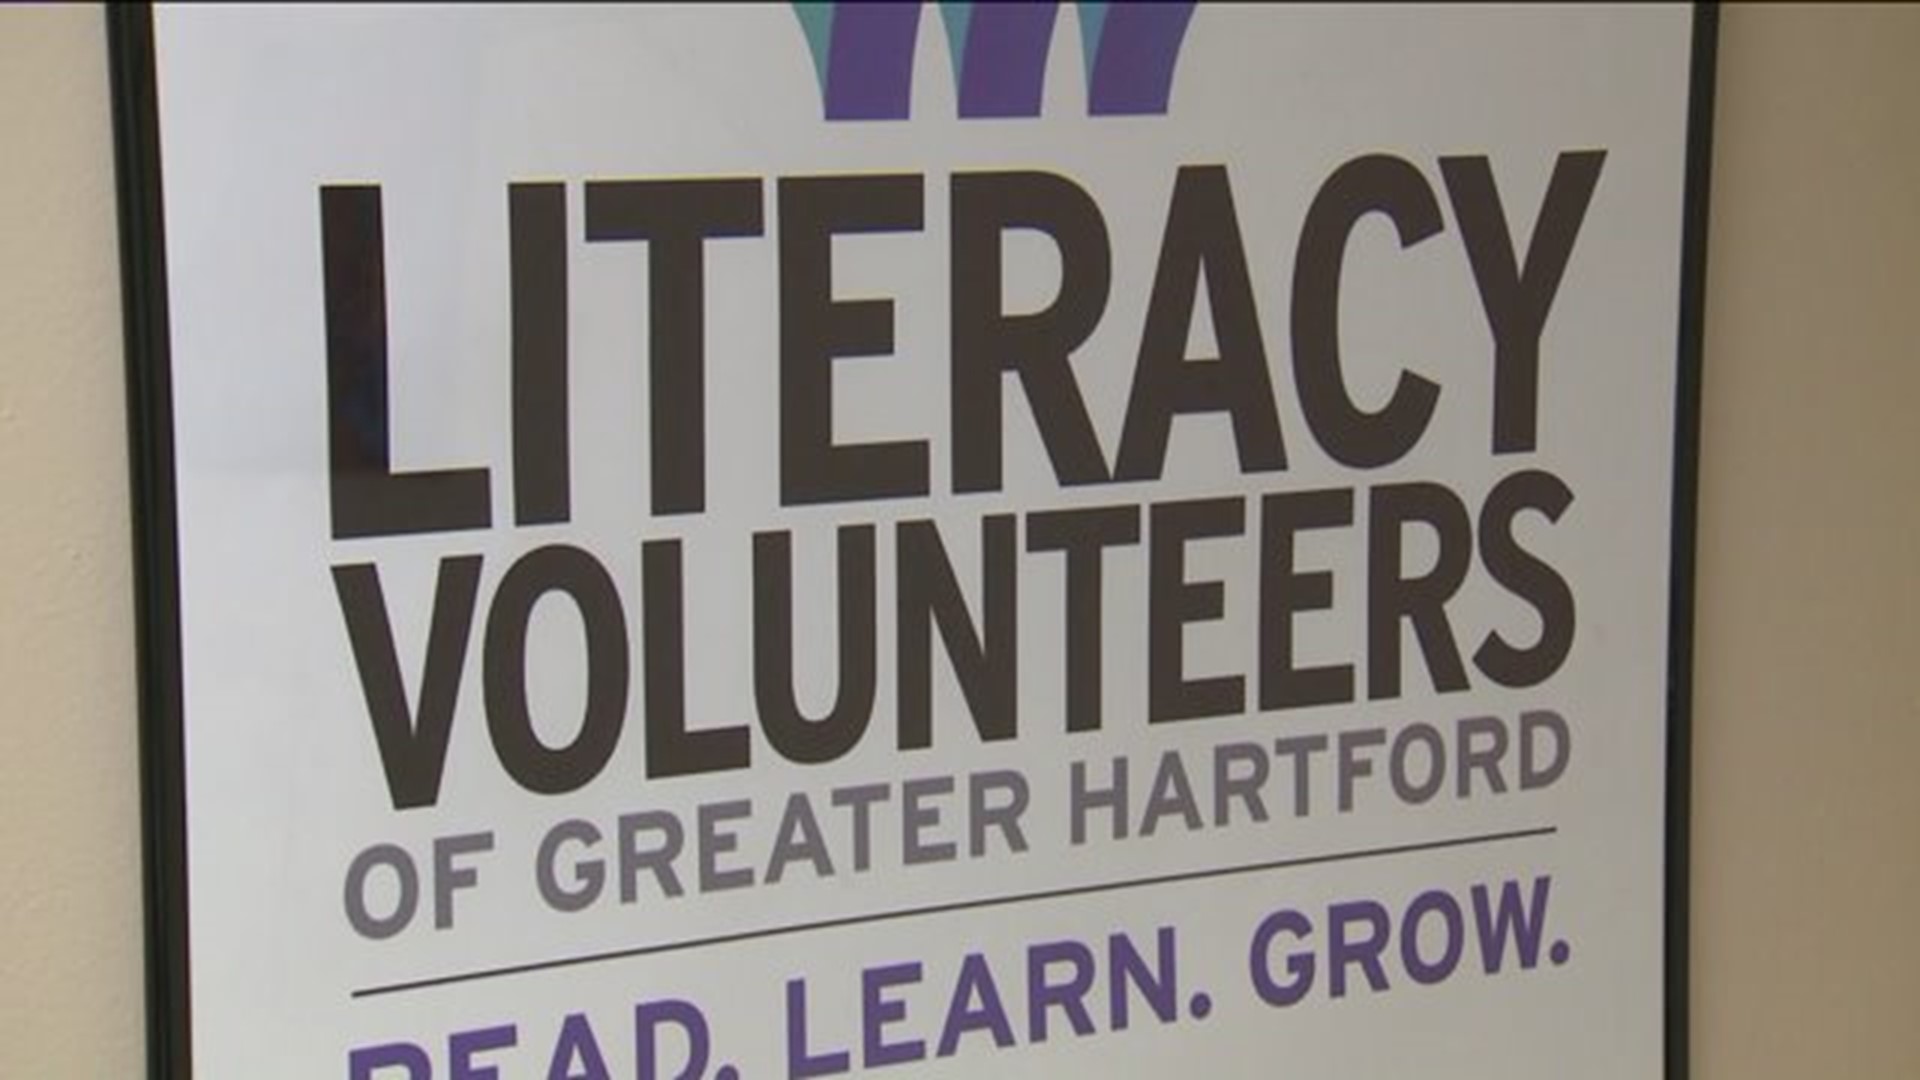 Literacy Volunteers of Greater Hartford: Helping people read and more